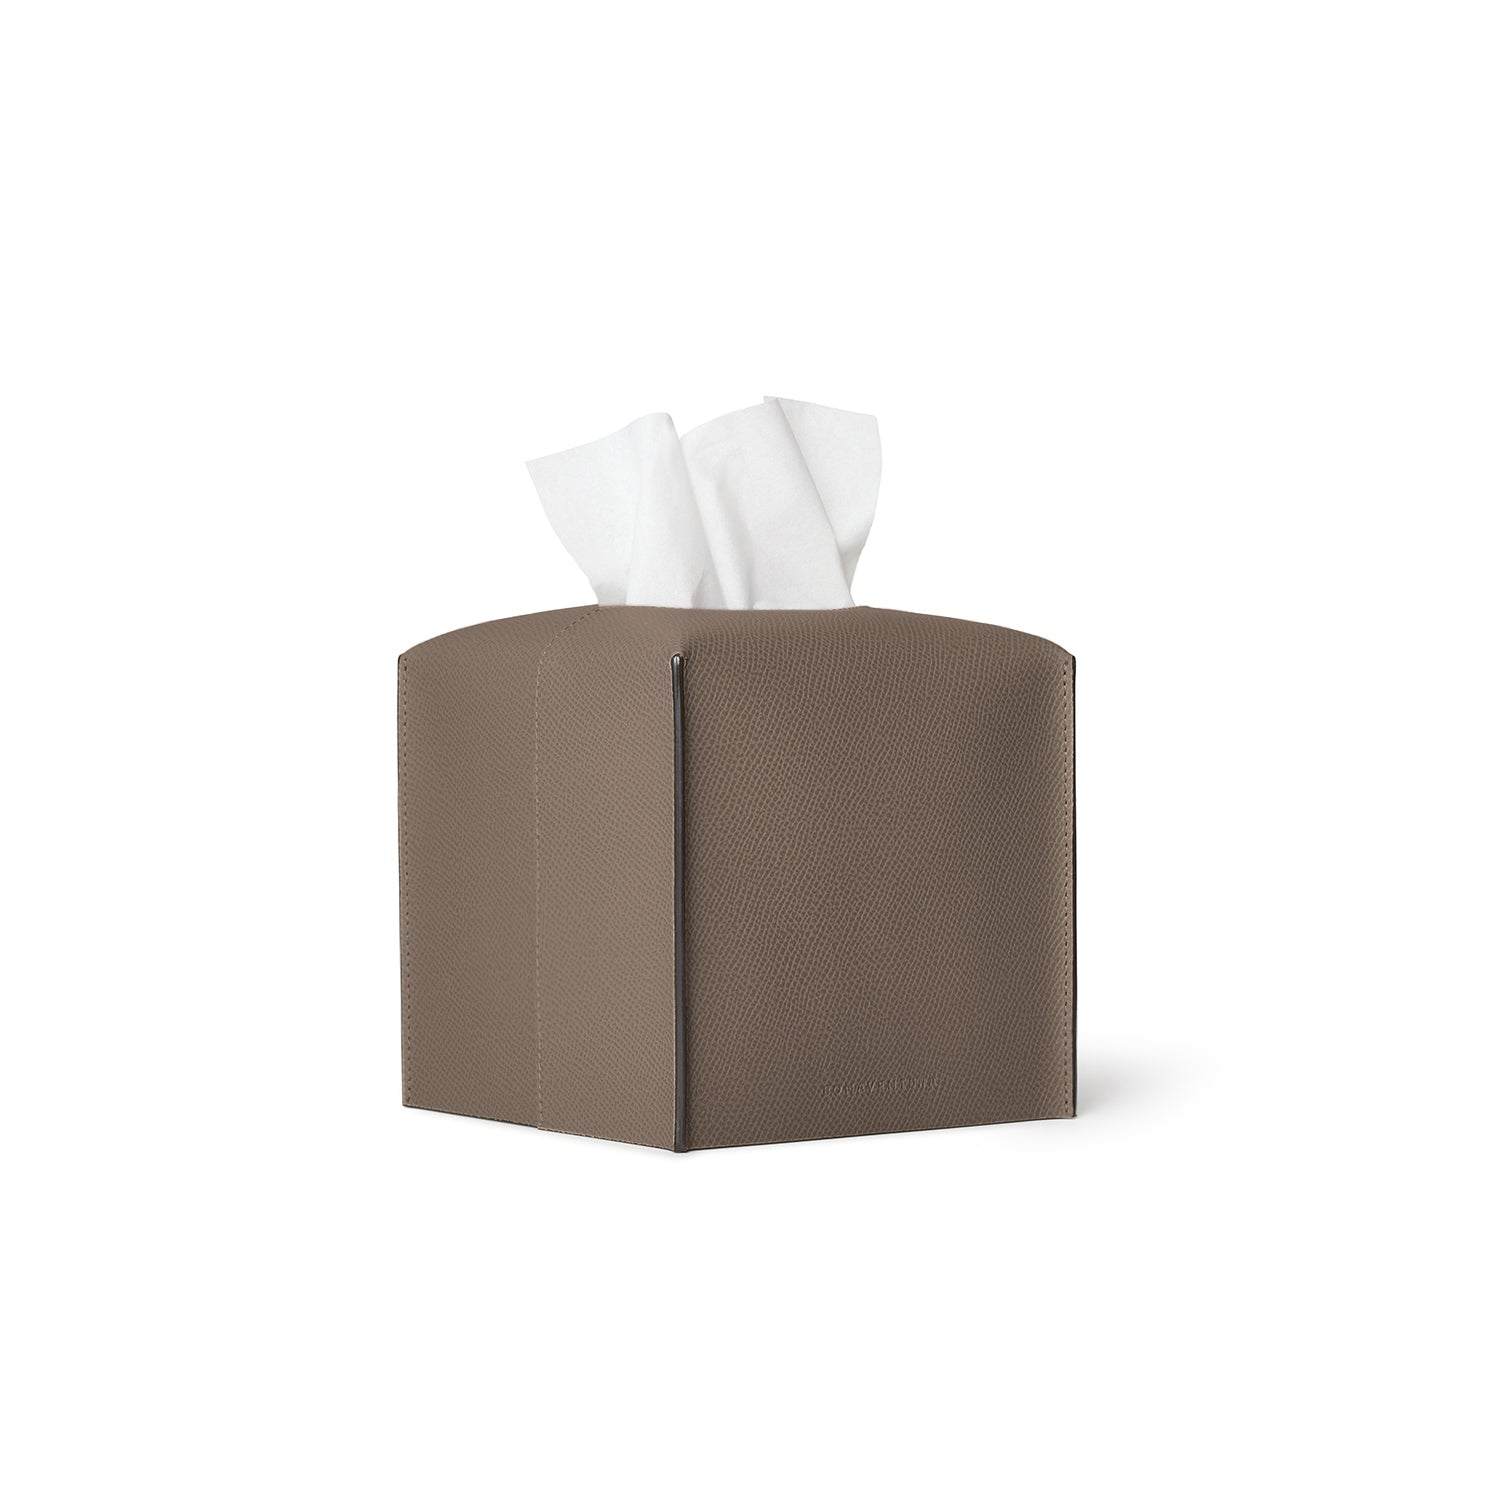 Tissue box cover (square Noblesse)